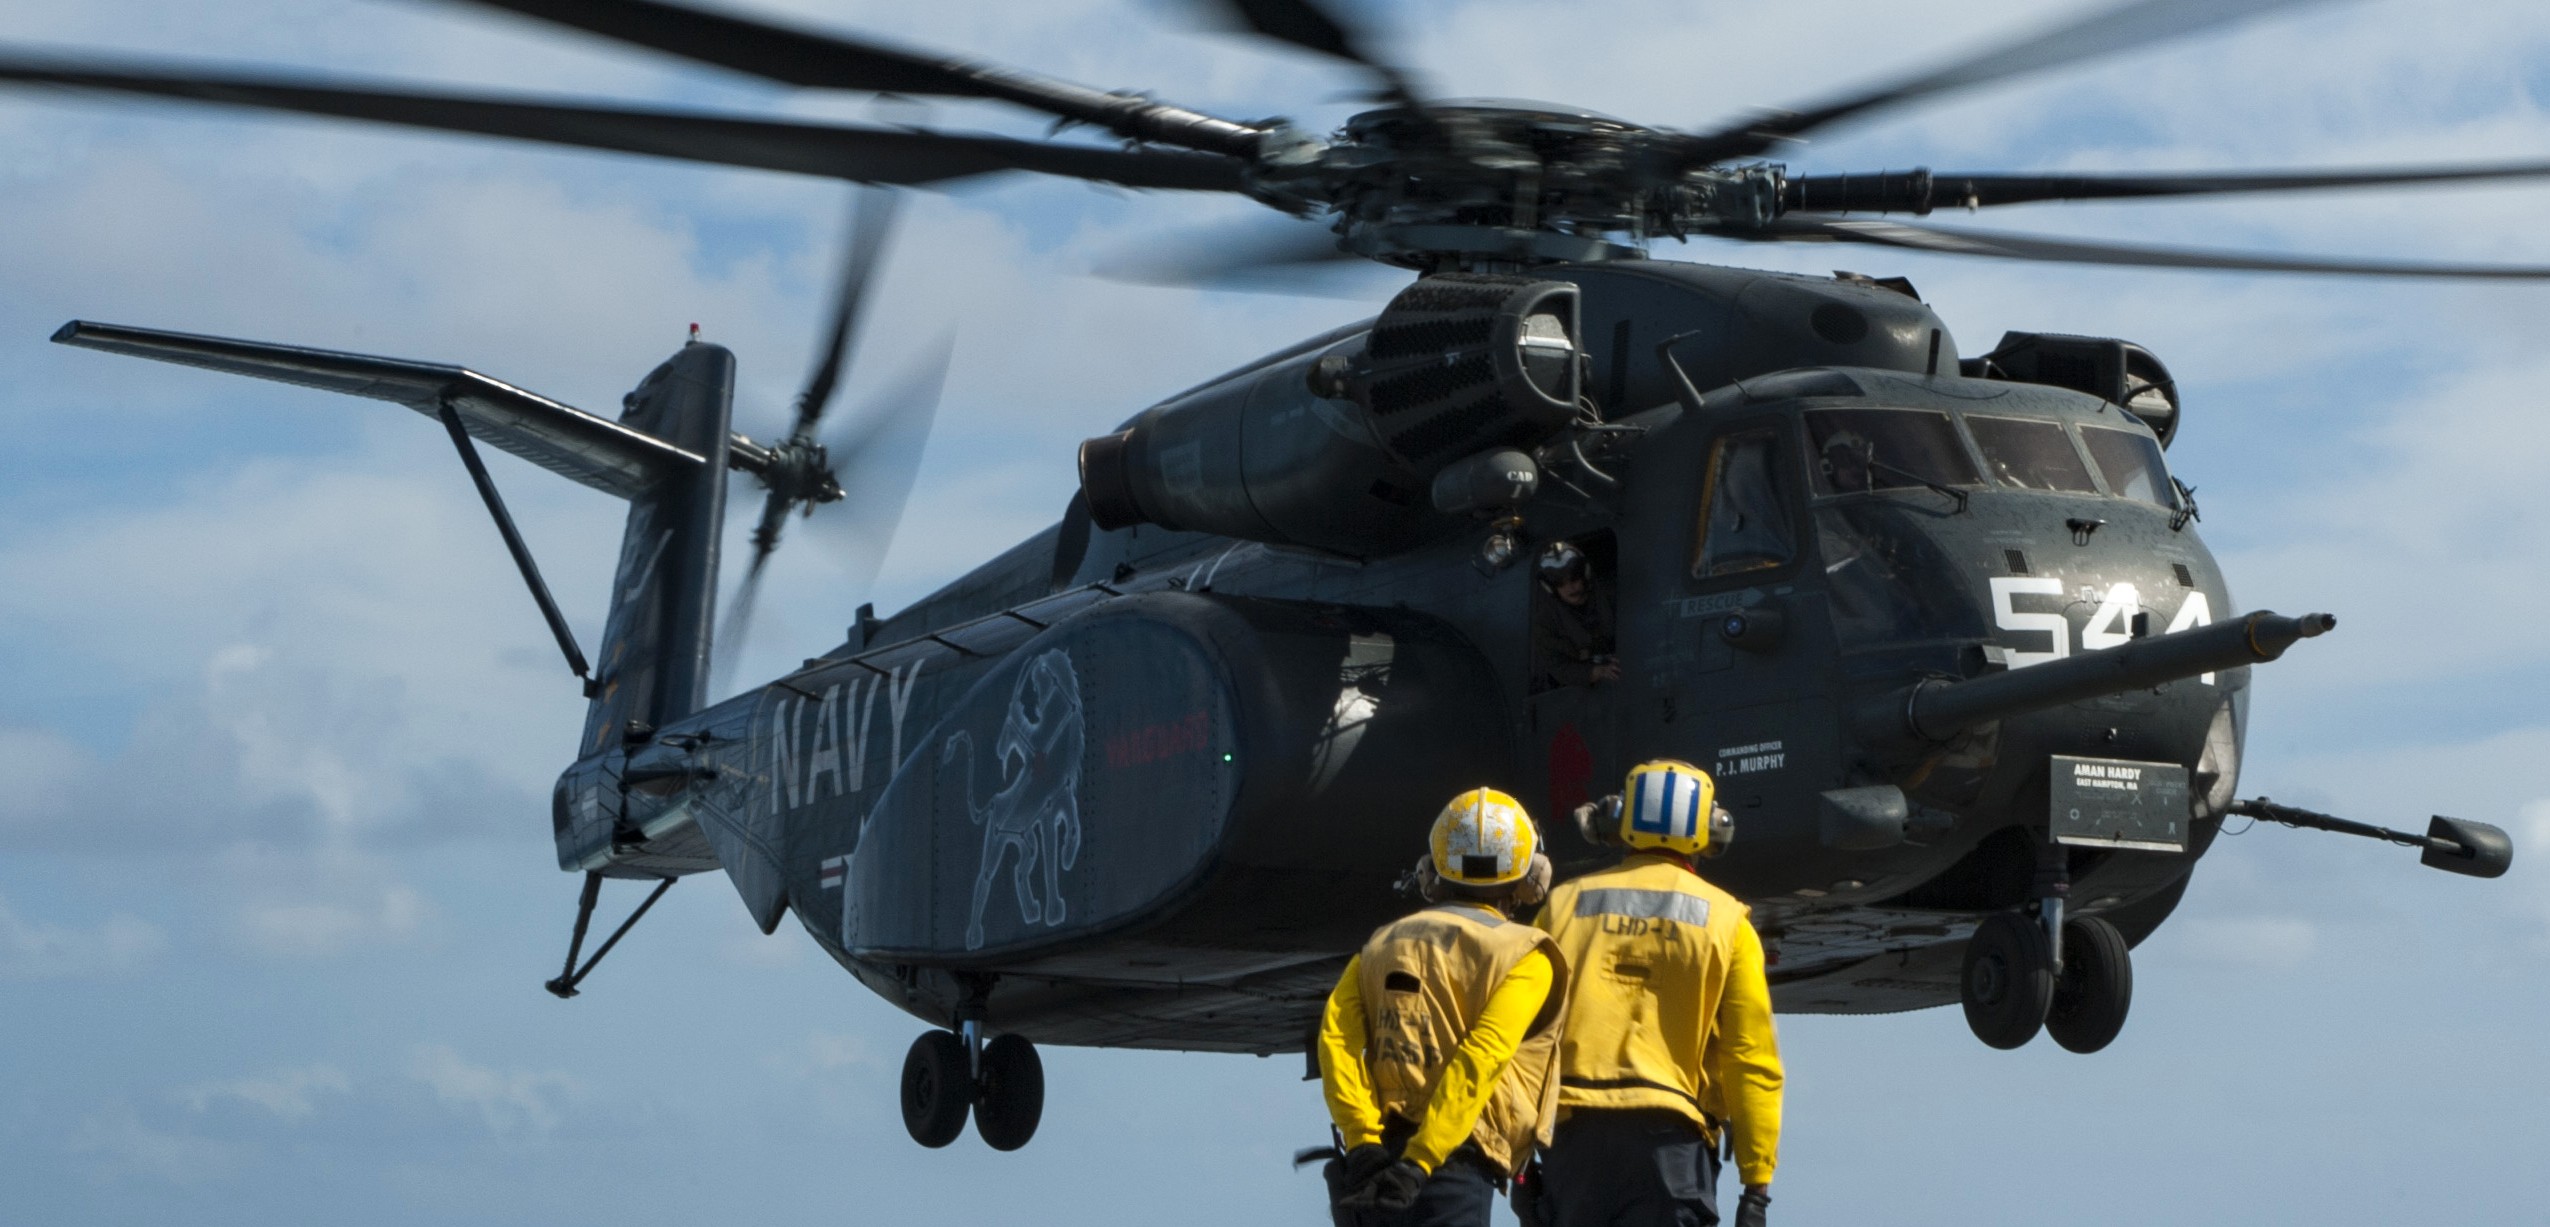 hm-14 vanguard helicopter mine countermeasures squadron navy mh-53e sea dragon 131